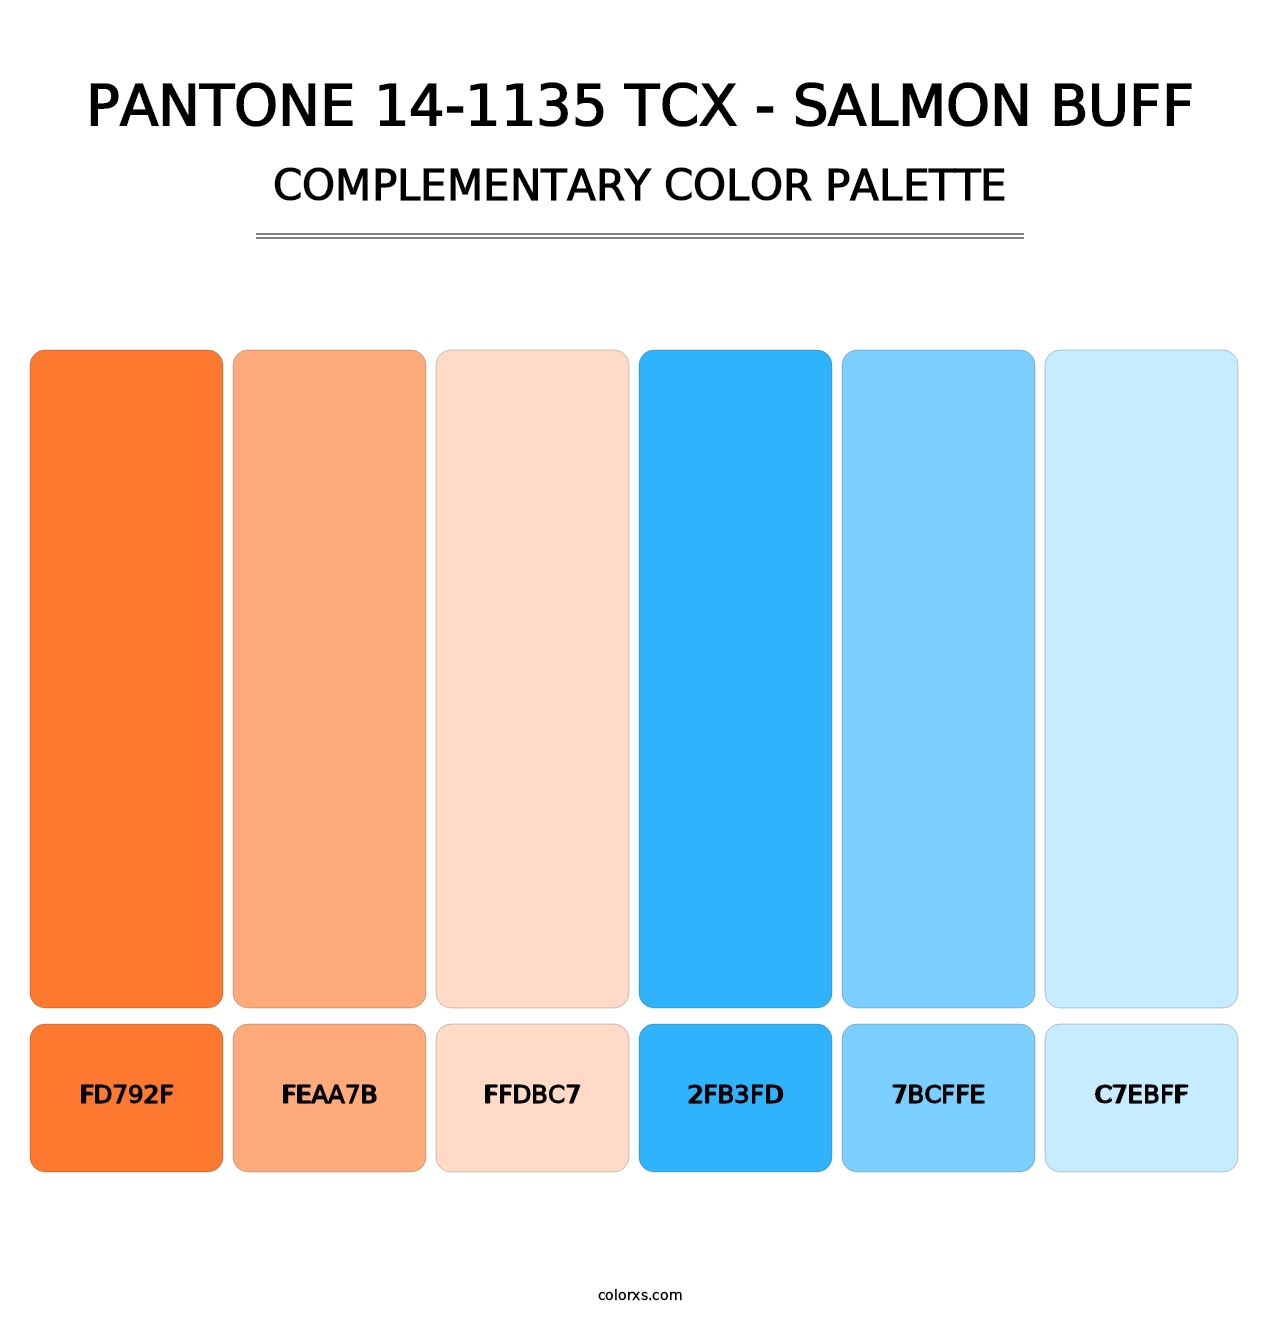 PANTONE 14-1135 TCX - Salmon Buff - Complementary Color Palette